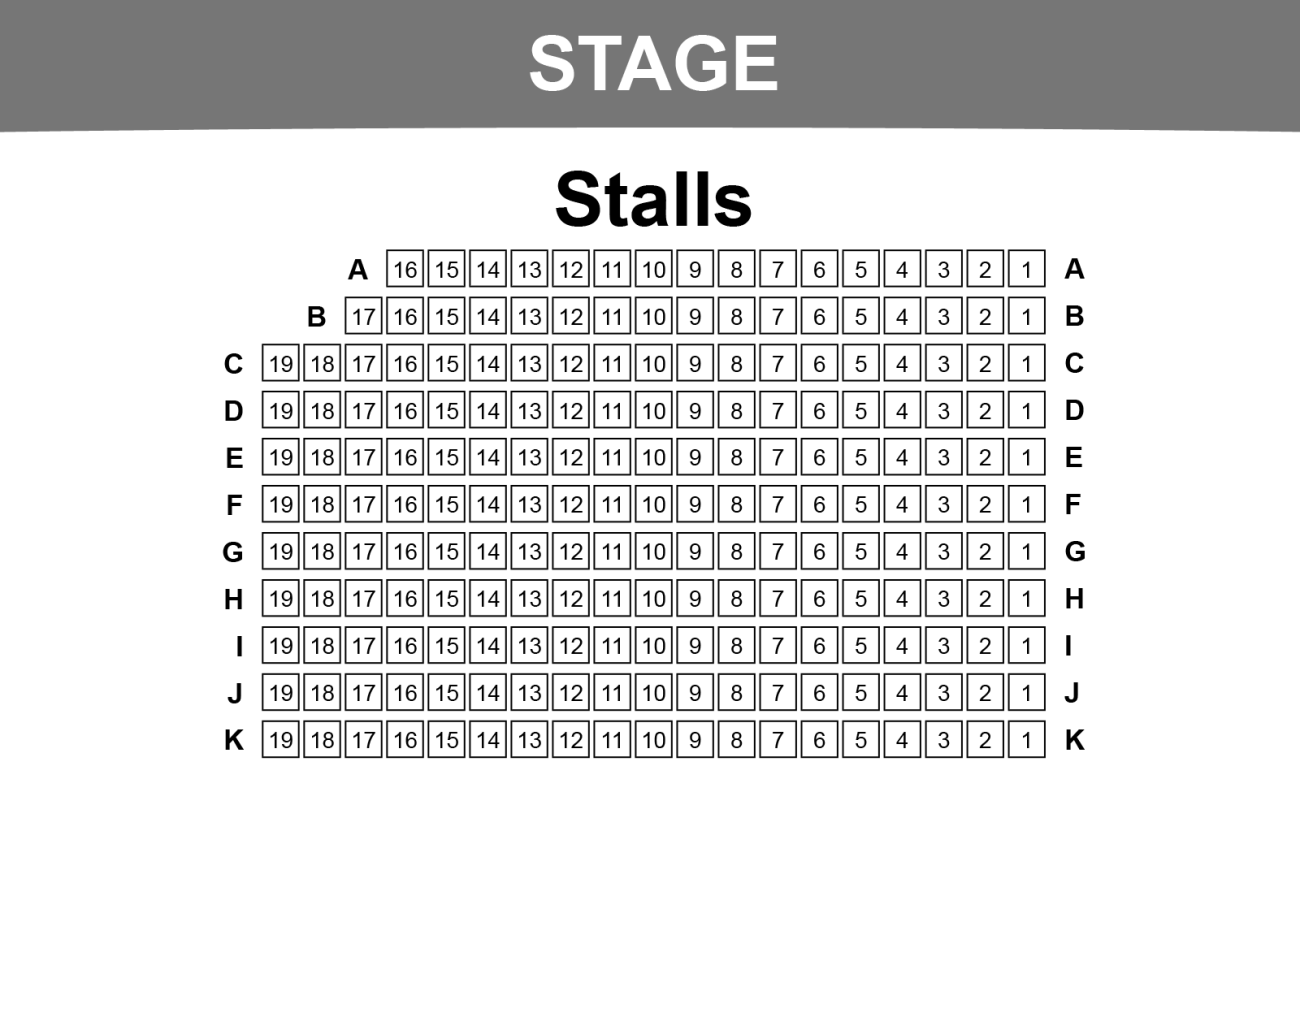 Marylebone Theatre Seating plan